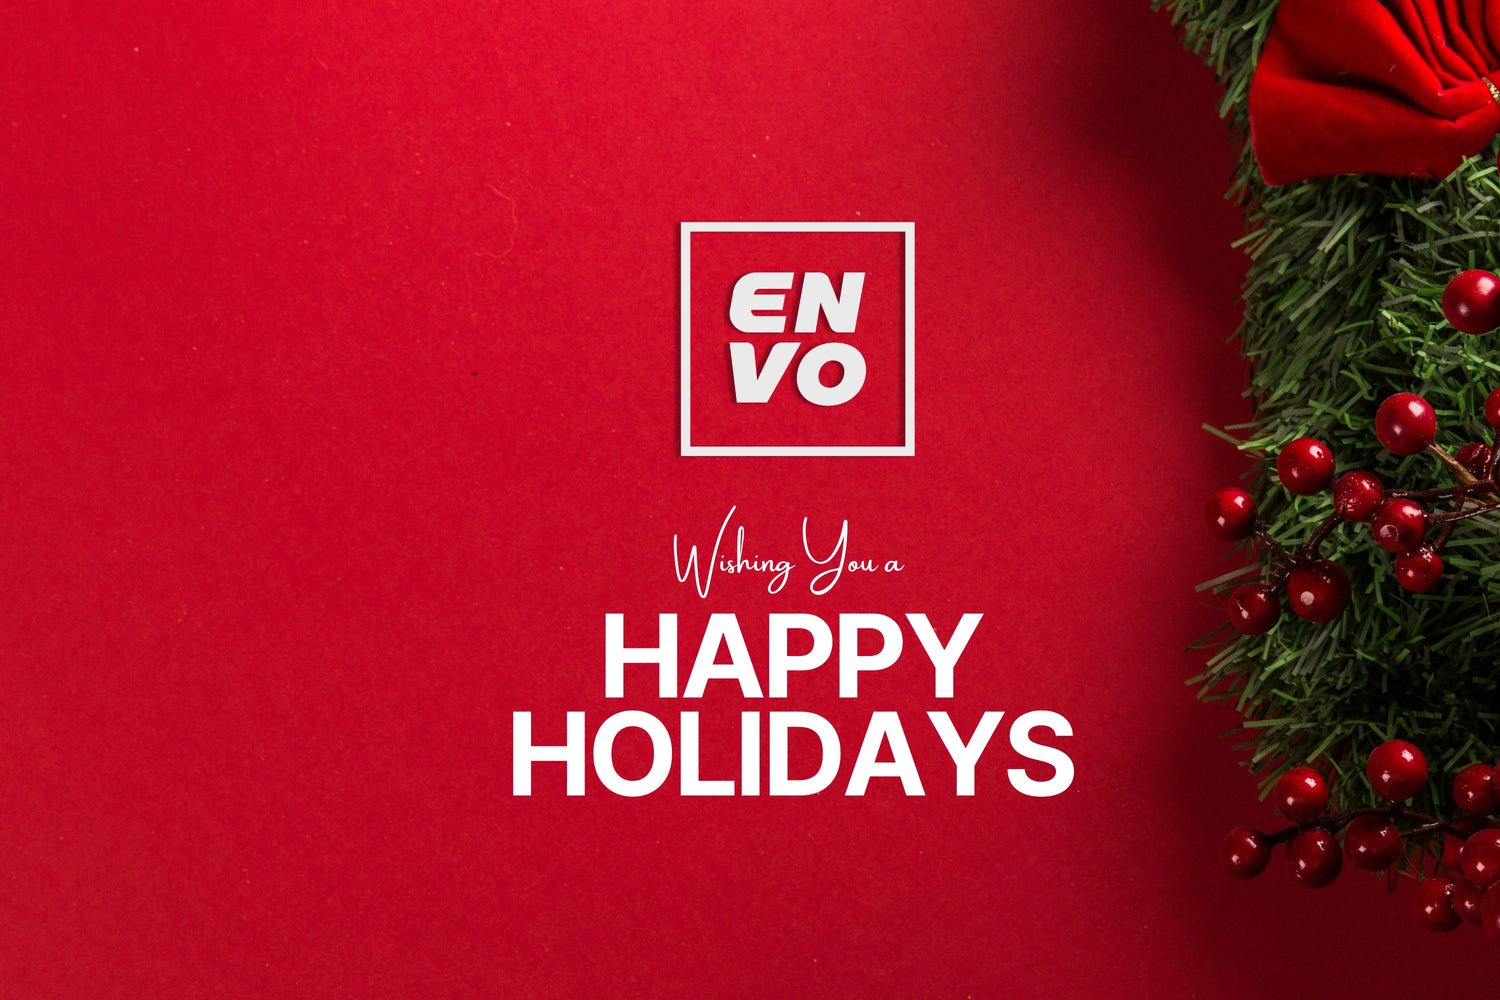 A warm season greetings from ENVO, Happy Holiday!